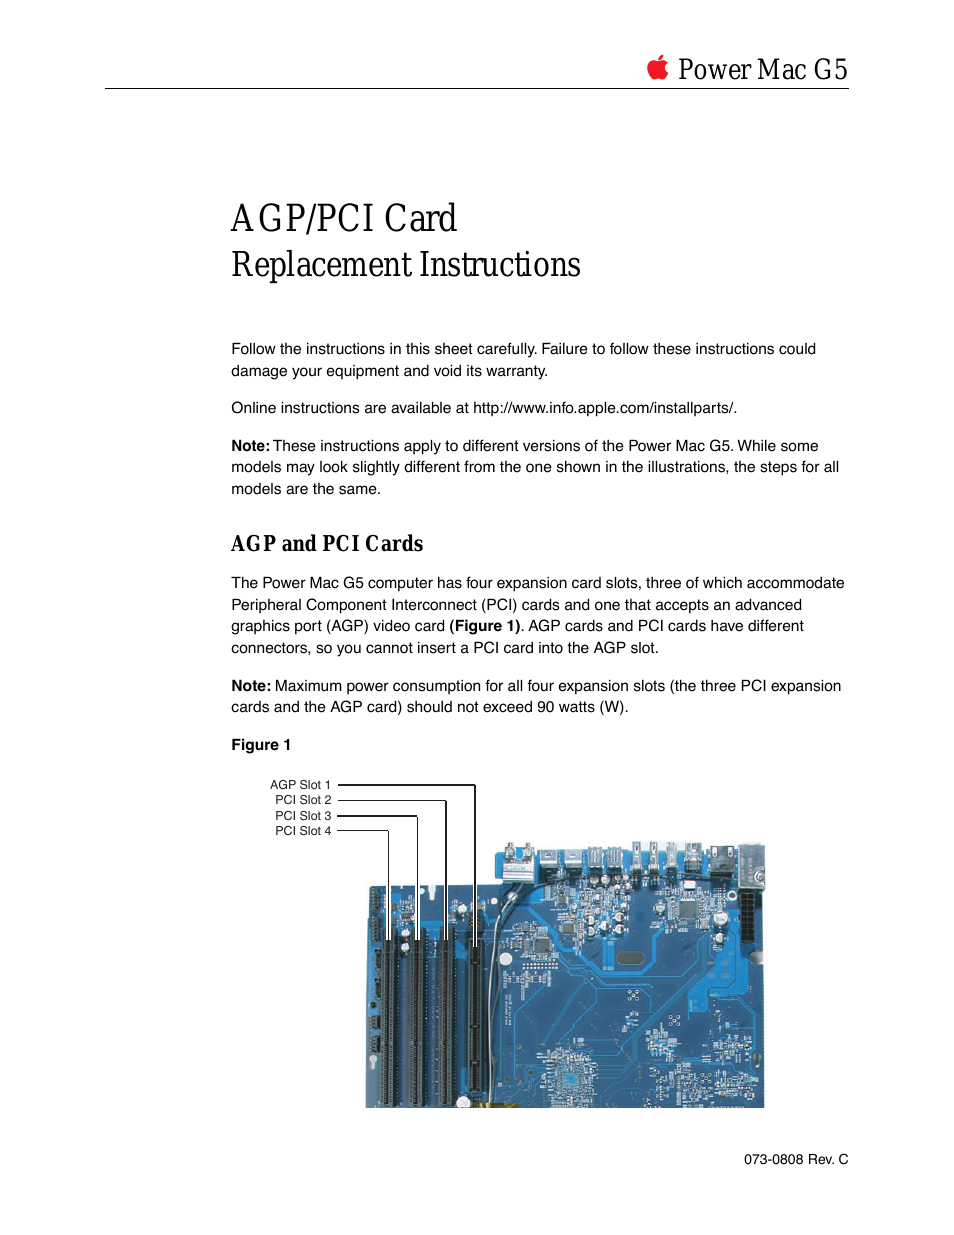 Power Mac G5 (AGP/PCI Card Replacement)